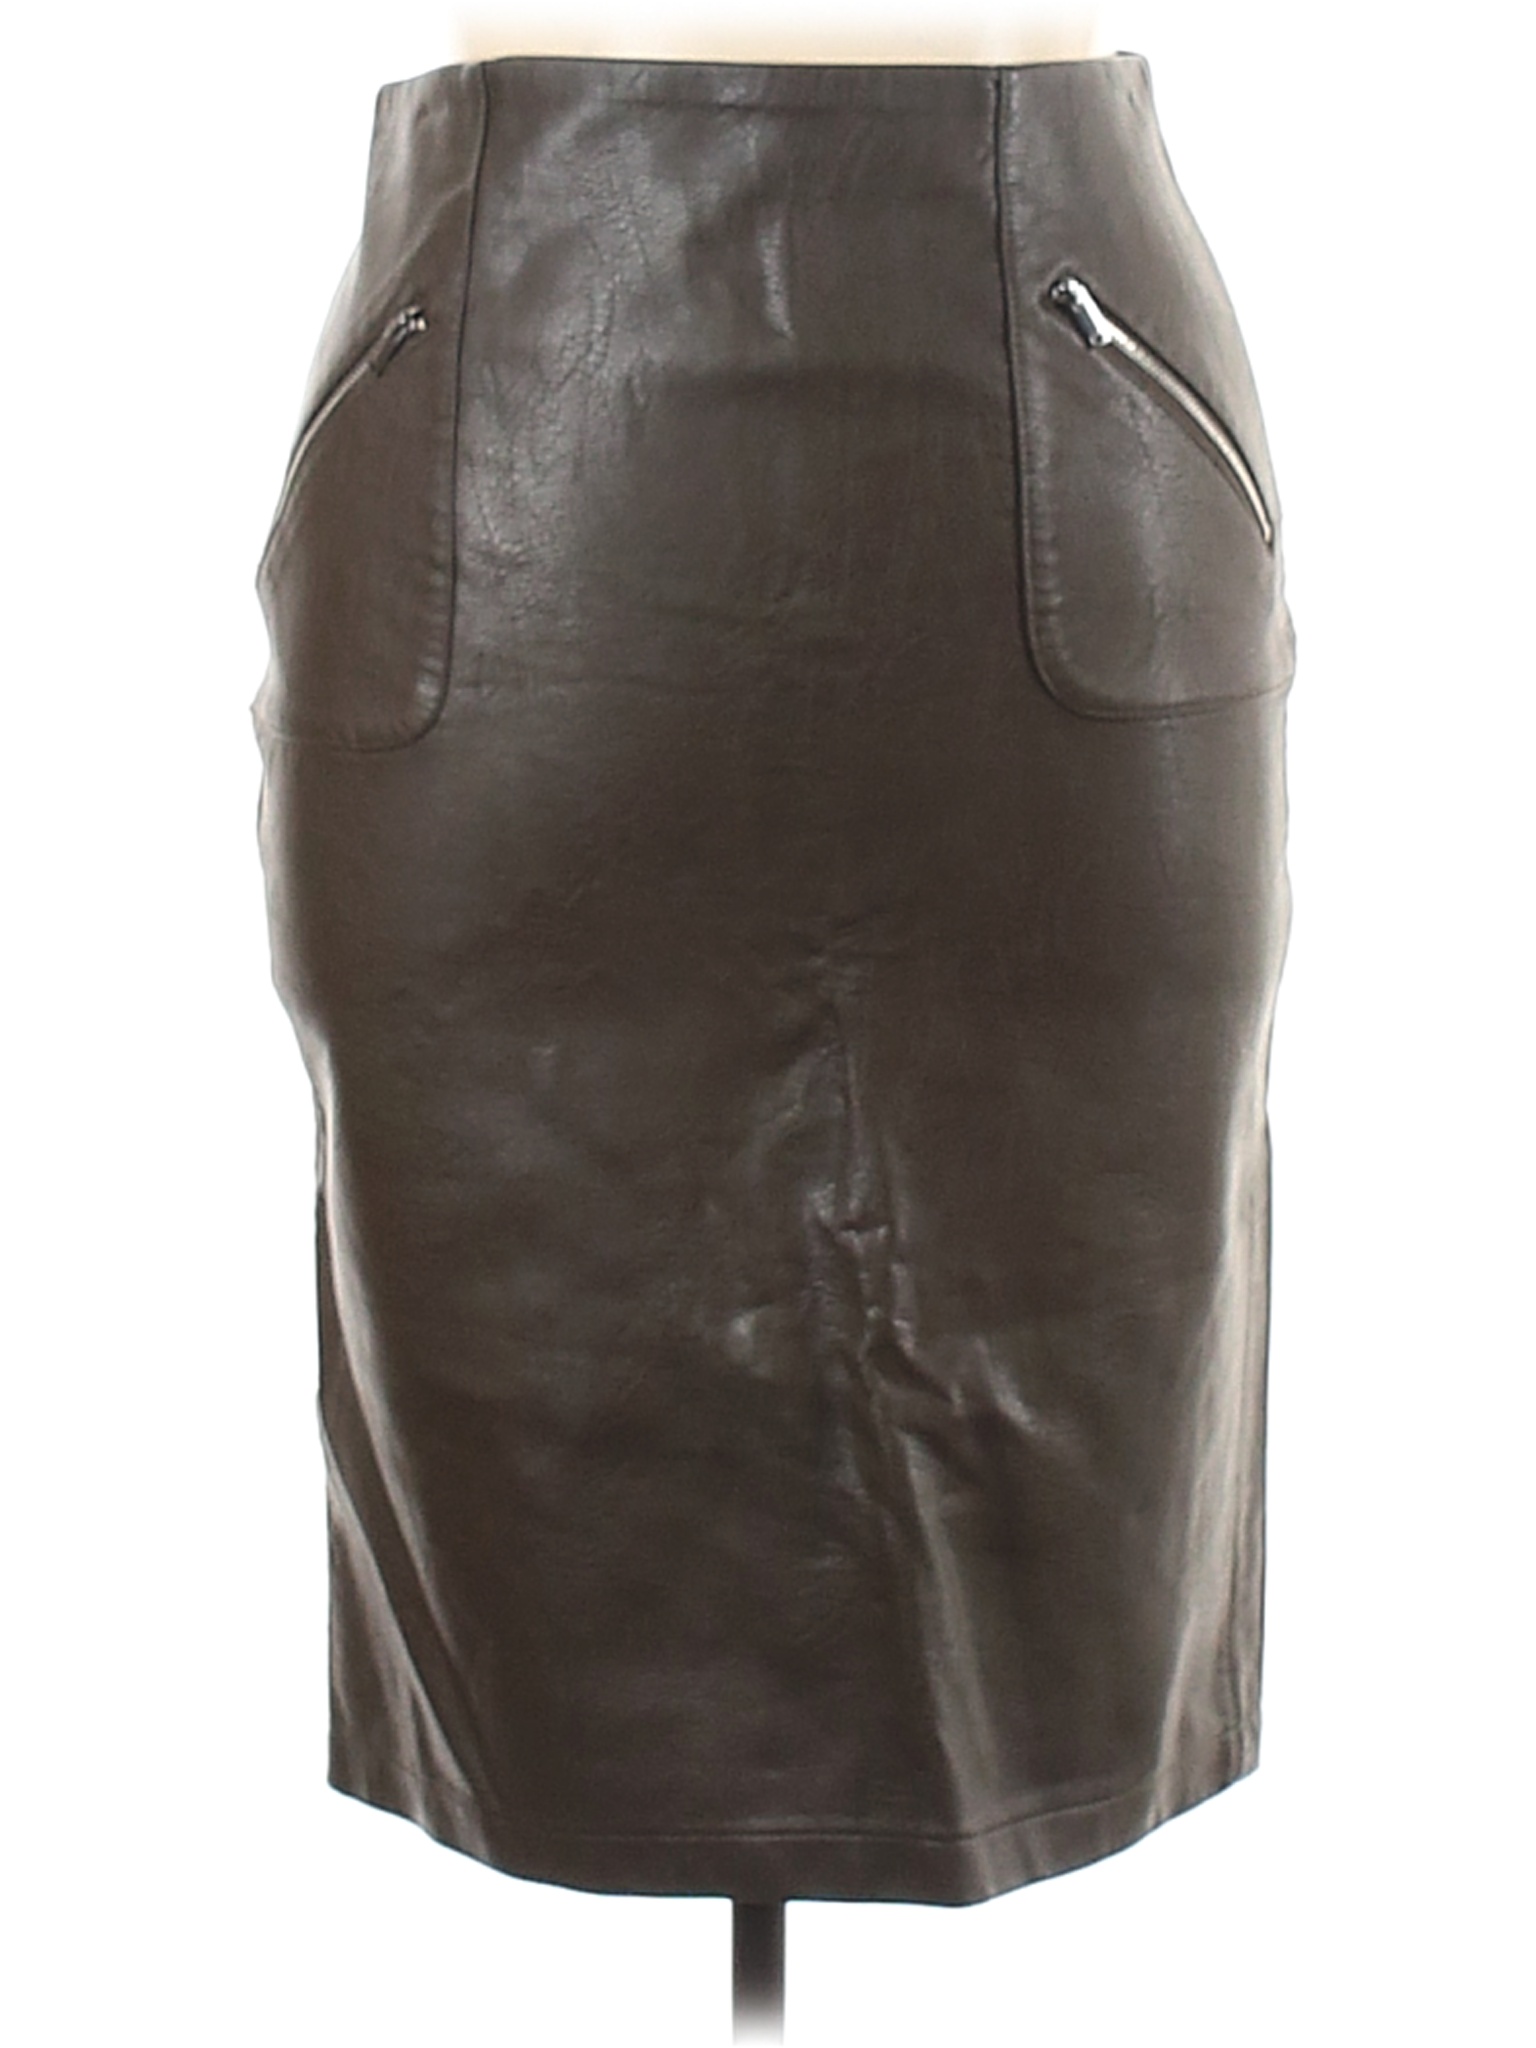 Zara Basic Women Brown Faux Leather Skirt XL | eBay